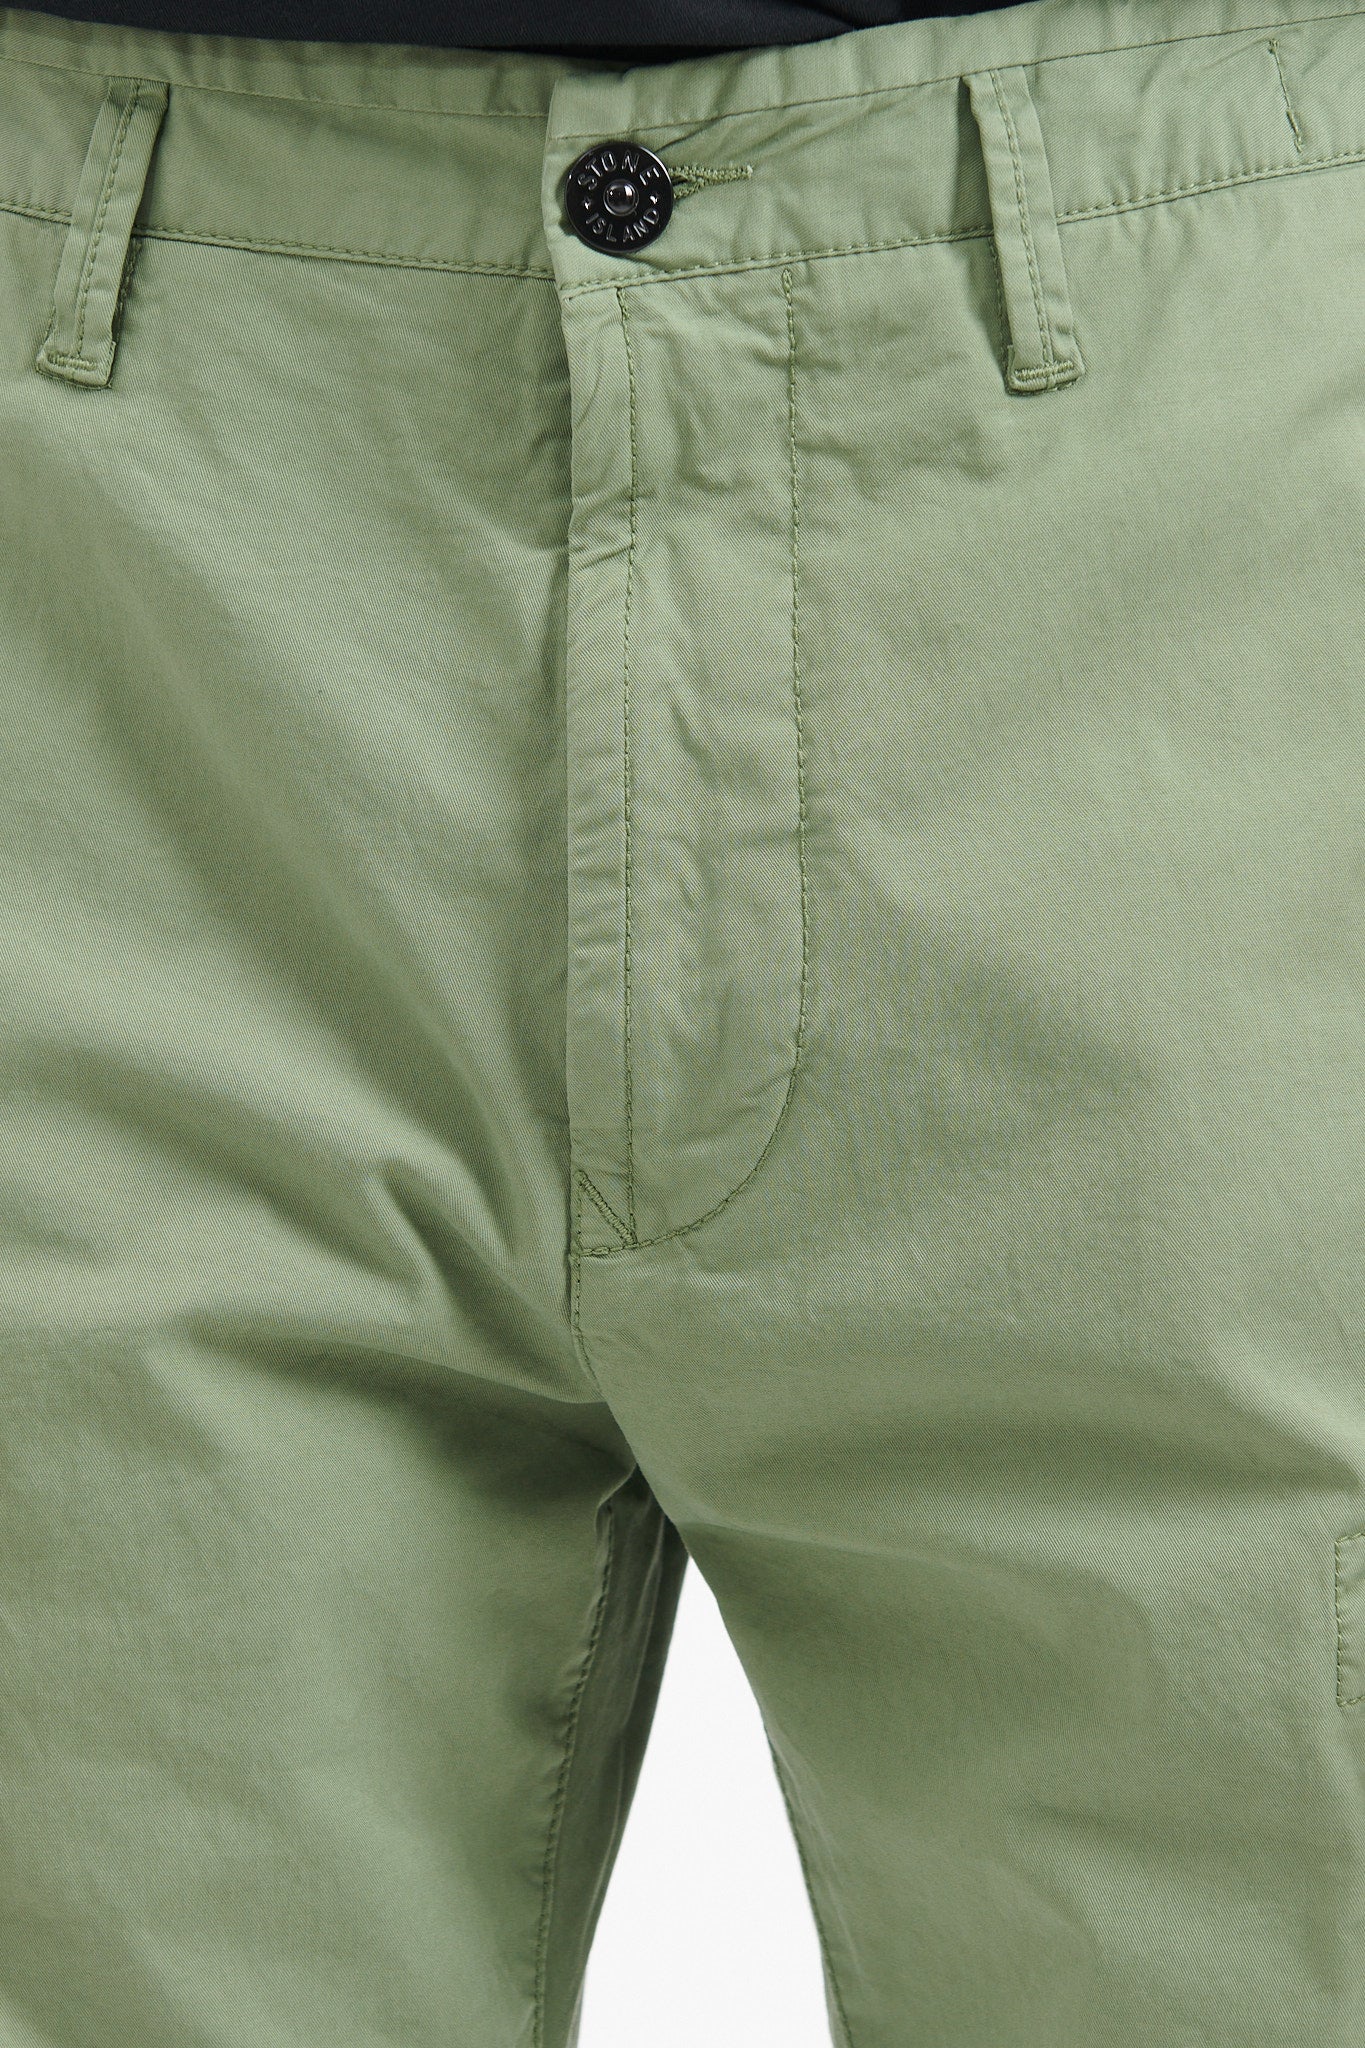 30410 Supima Cotton Twill Pants Regular Tapered - Sage